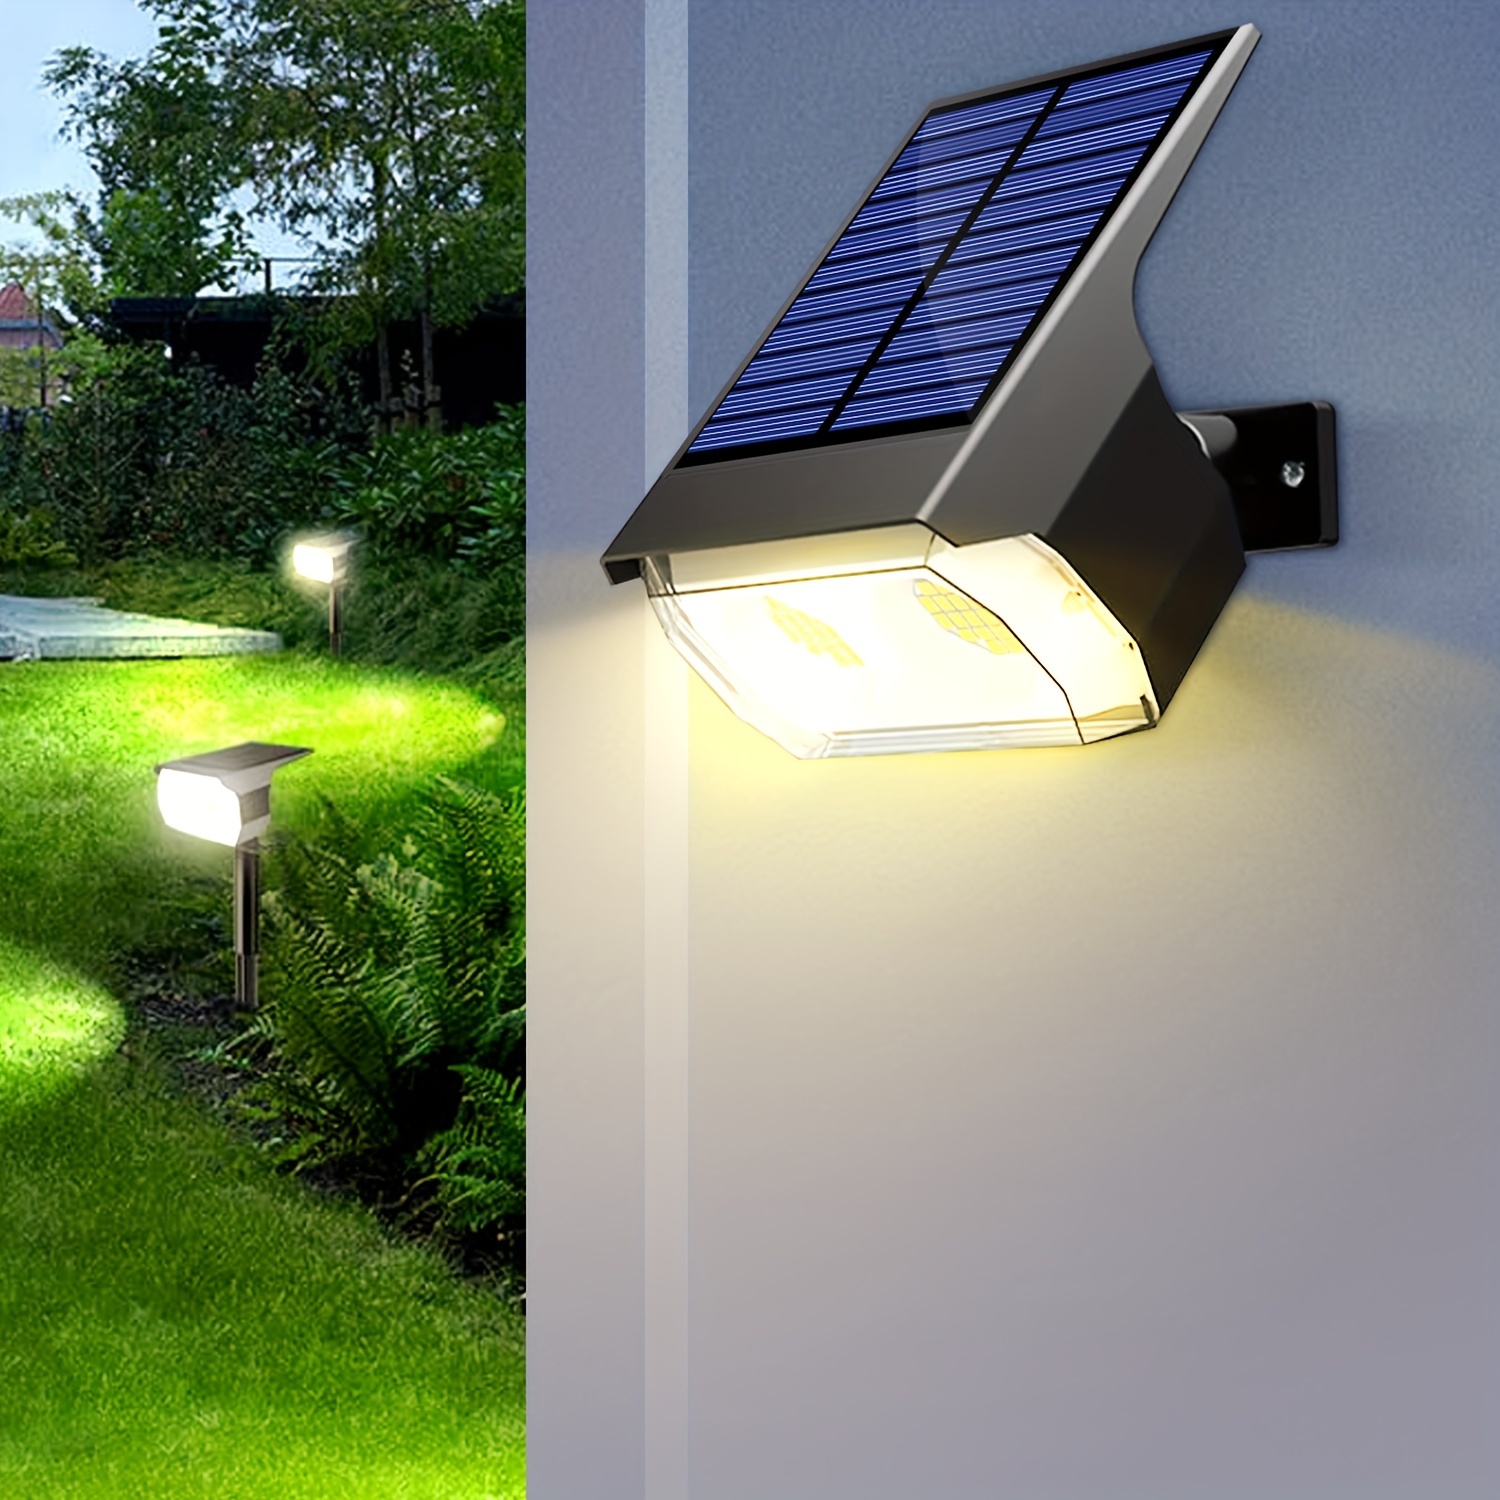 T-SUN Focos solares de 2 W, luces LED de paisaje alimentadas por energía  solar para exteriores, impermeables, luces de pared de seguridad solar de